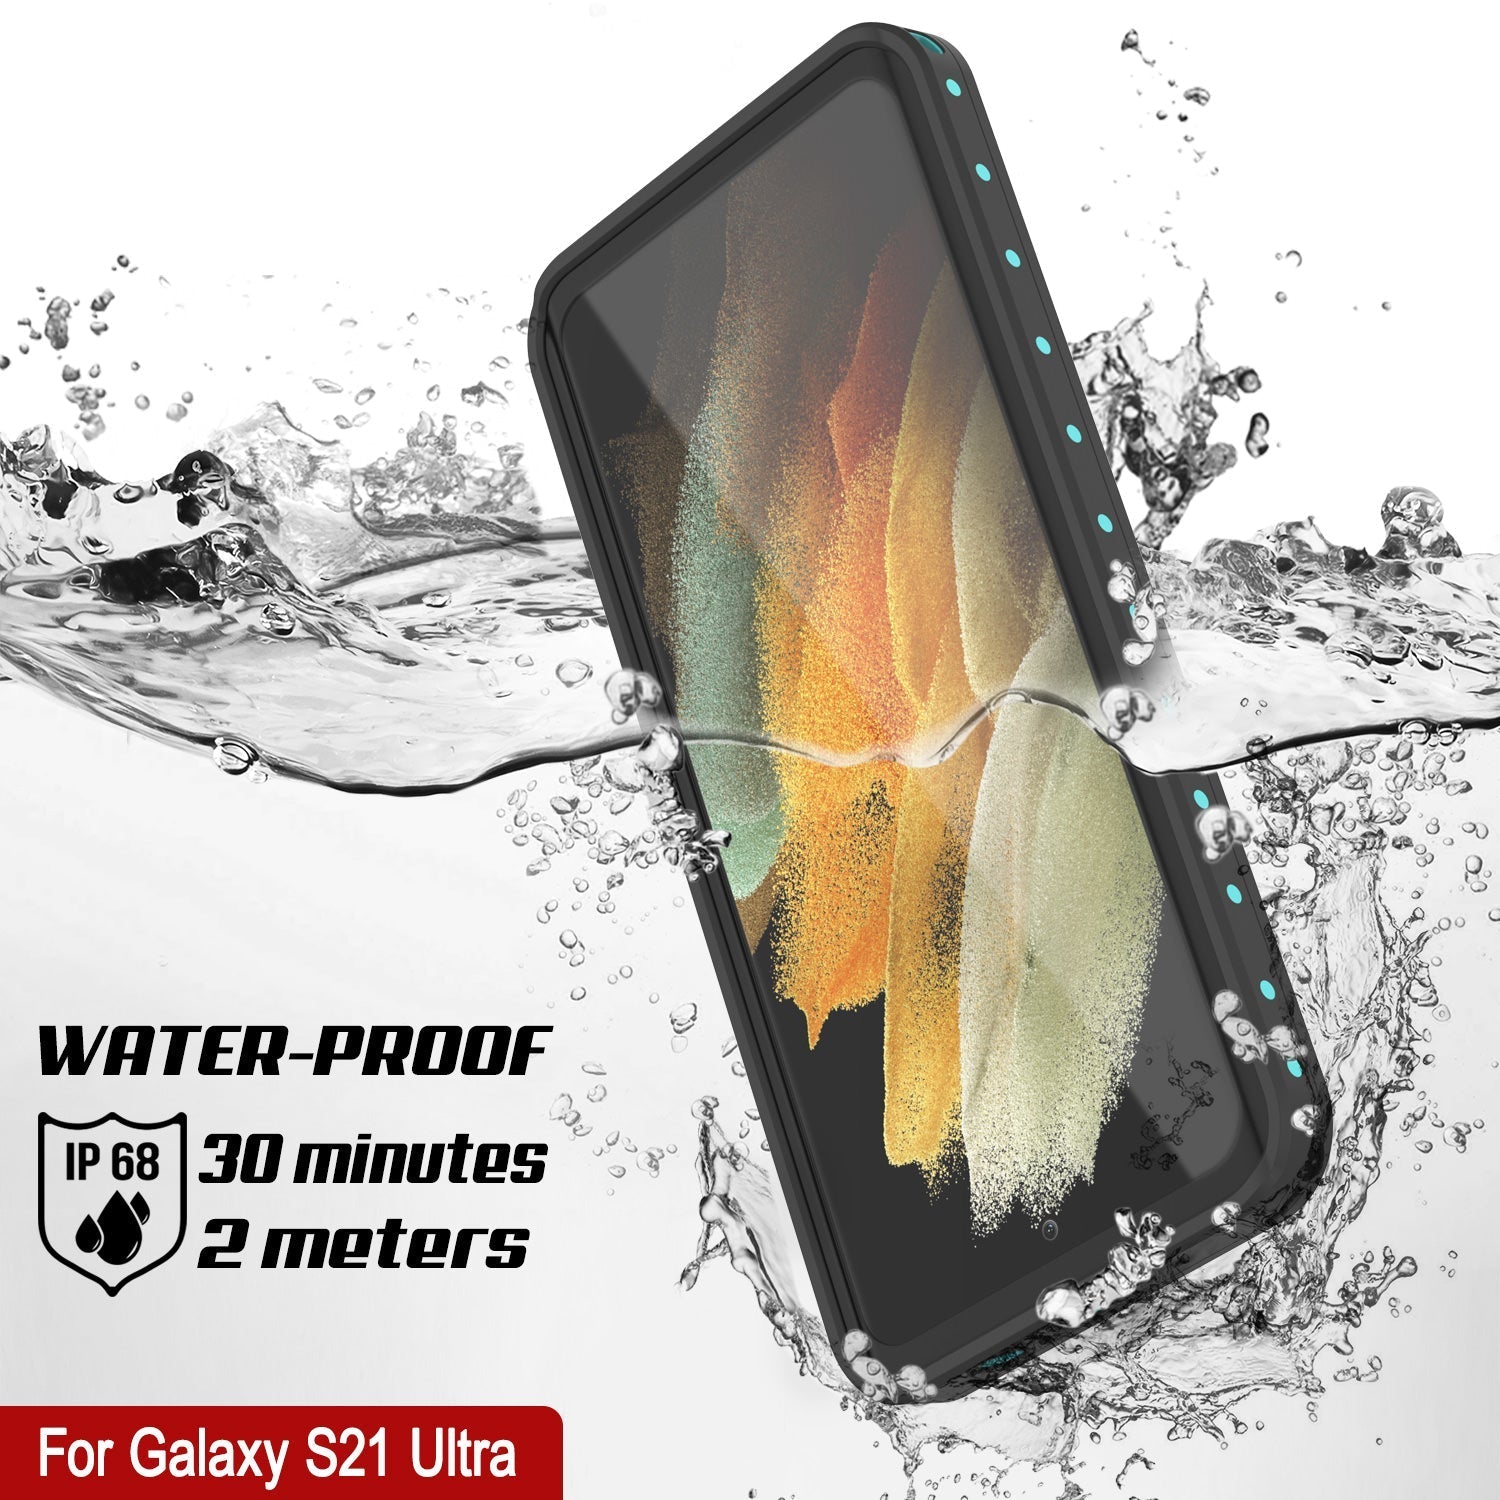 Galaxy S22 Ultra Waterproof Case PunkCase StudStar Teal Thin 6.6ft Underwater IP68 Shock/Snow Proof